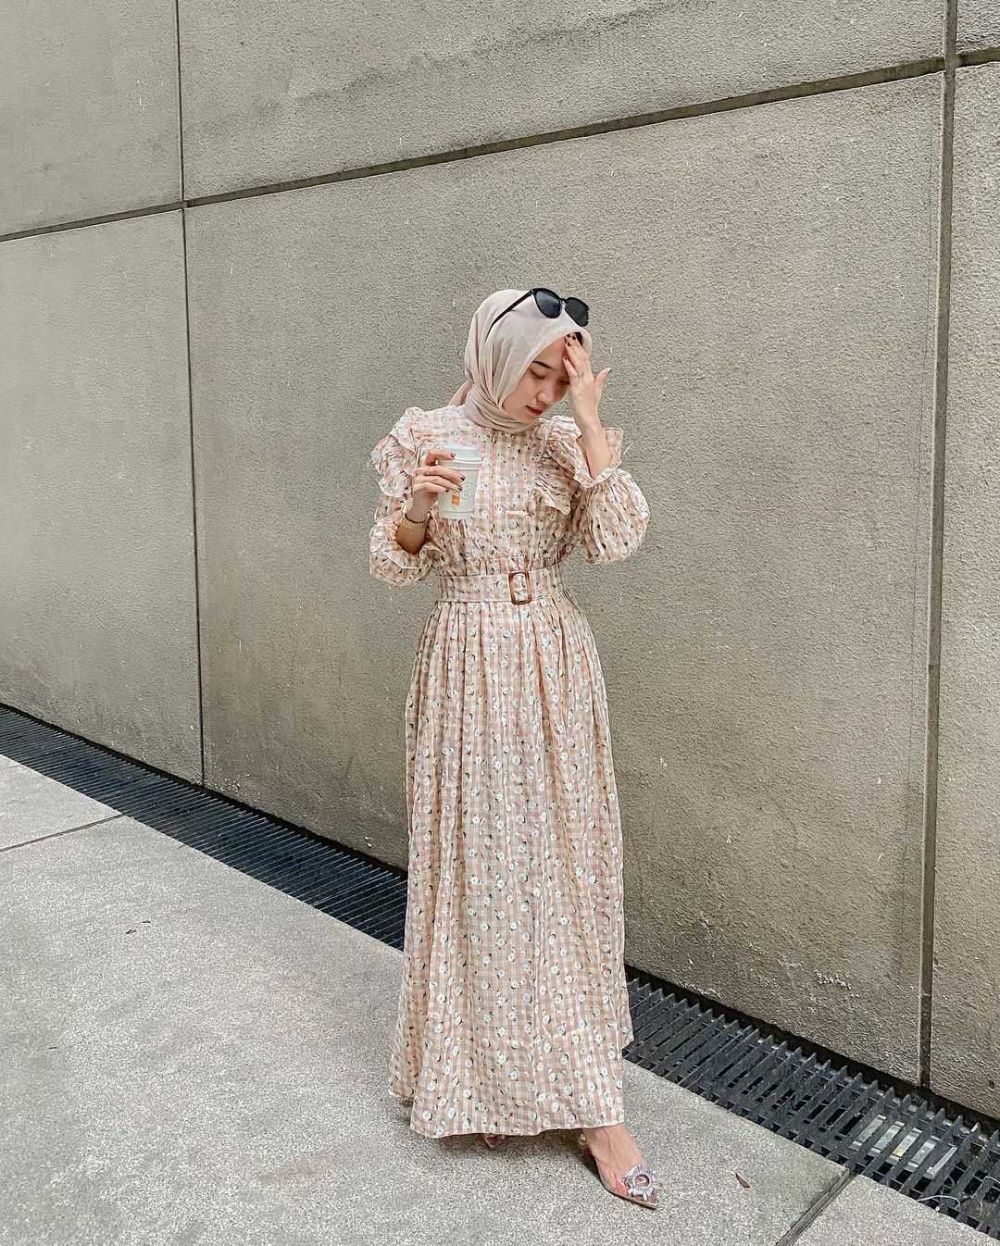 10 Ide Hijab Style dengan Outfit Dress ala Zahra Suci, Effortless!